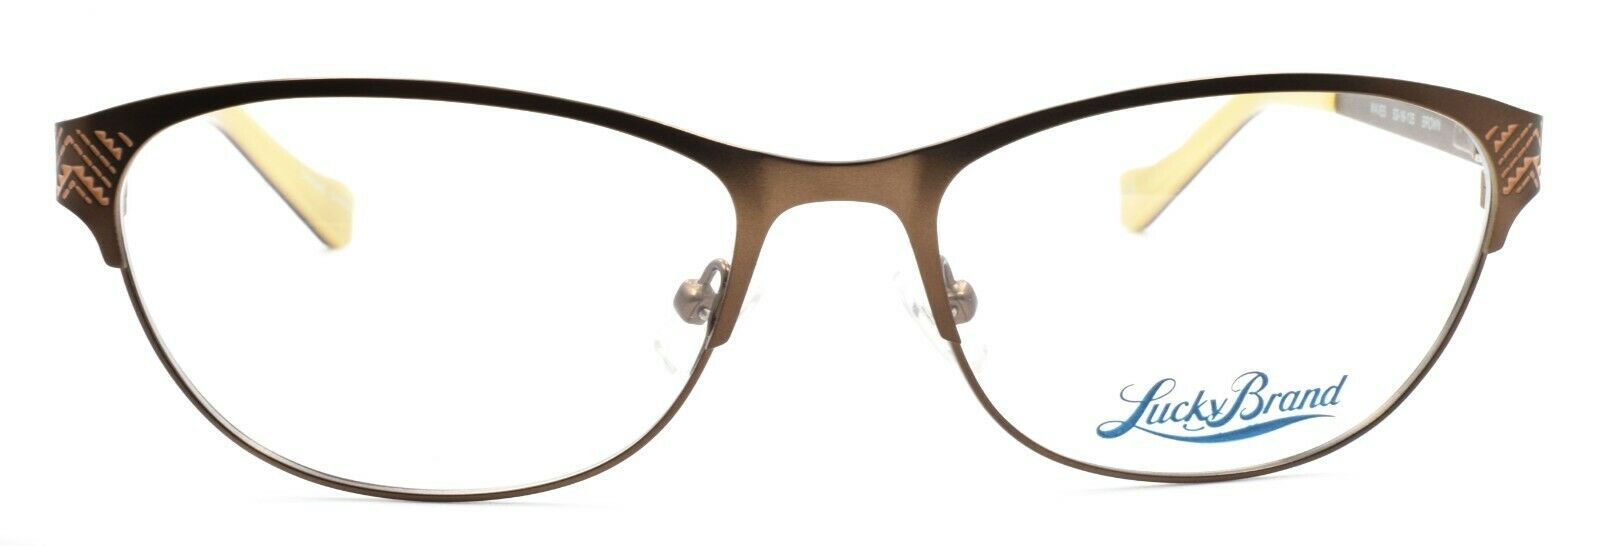 2-LUCKY BRAND Waves Women's Eyeglasses Frames 53-16-135 Brown + CASE-751286263626-IKSpecs